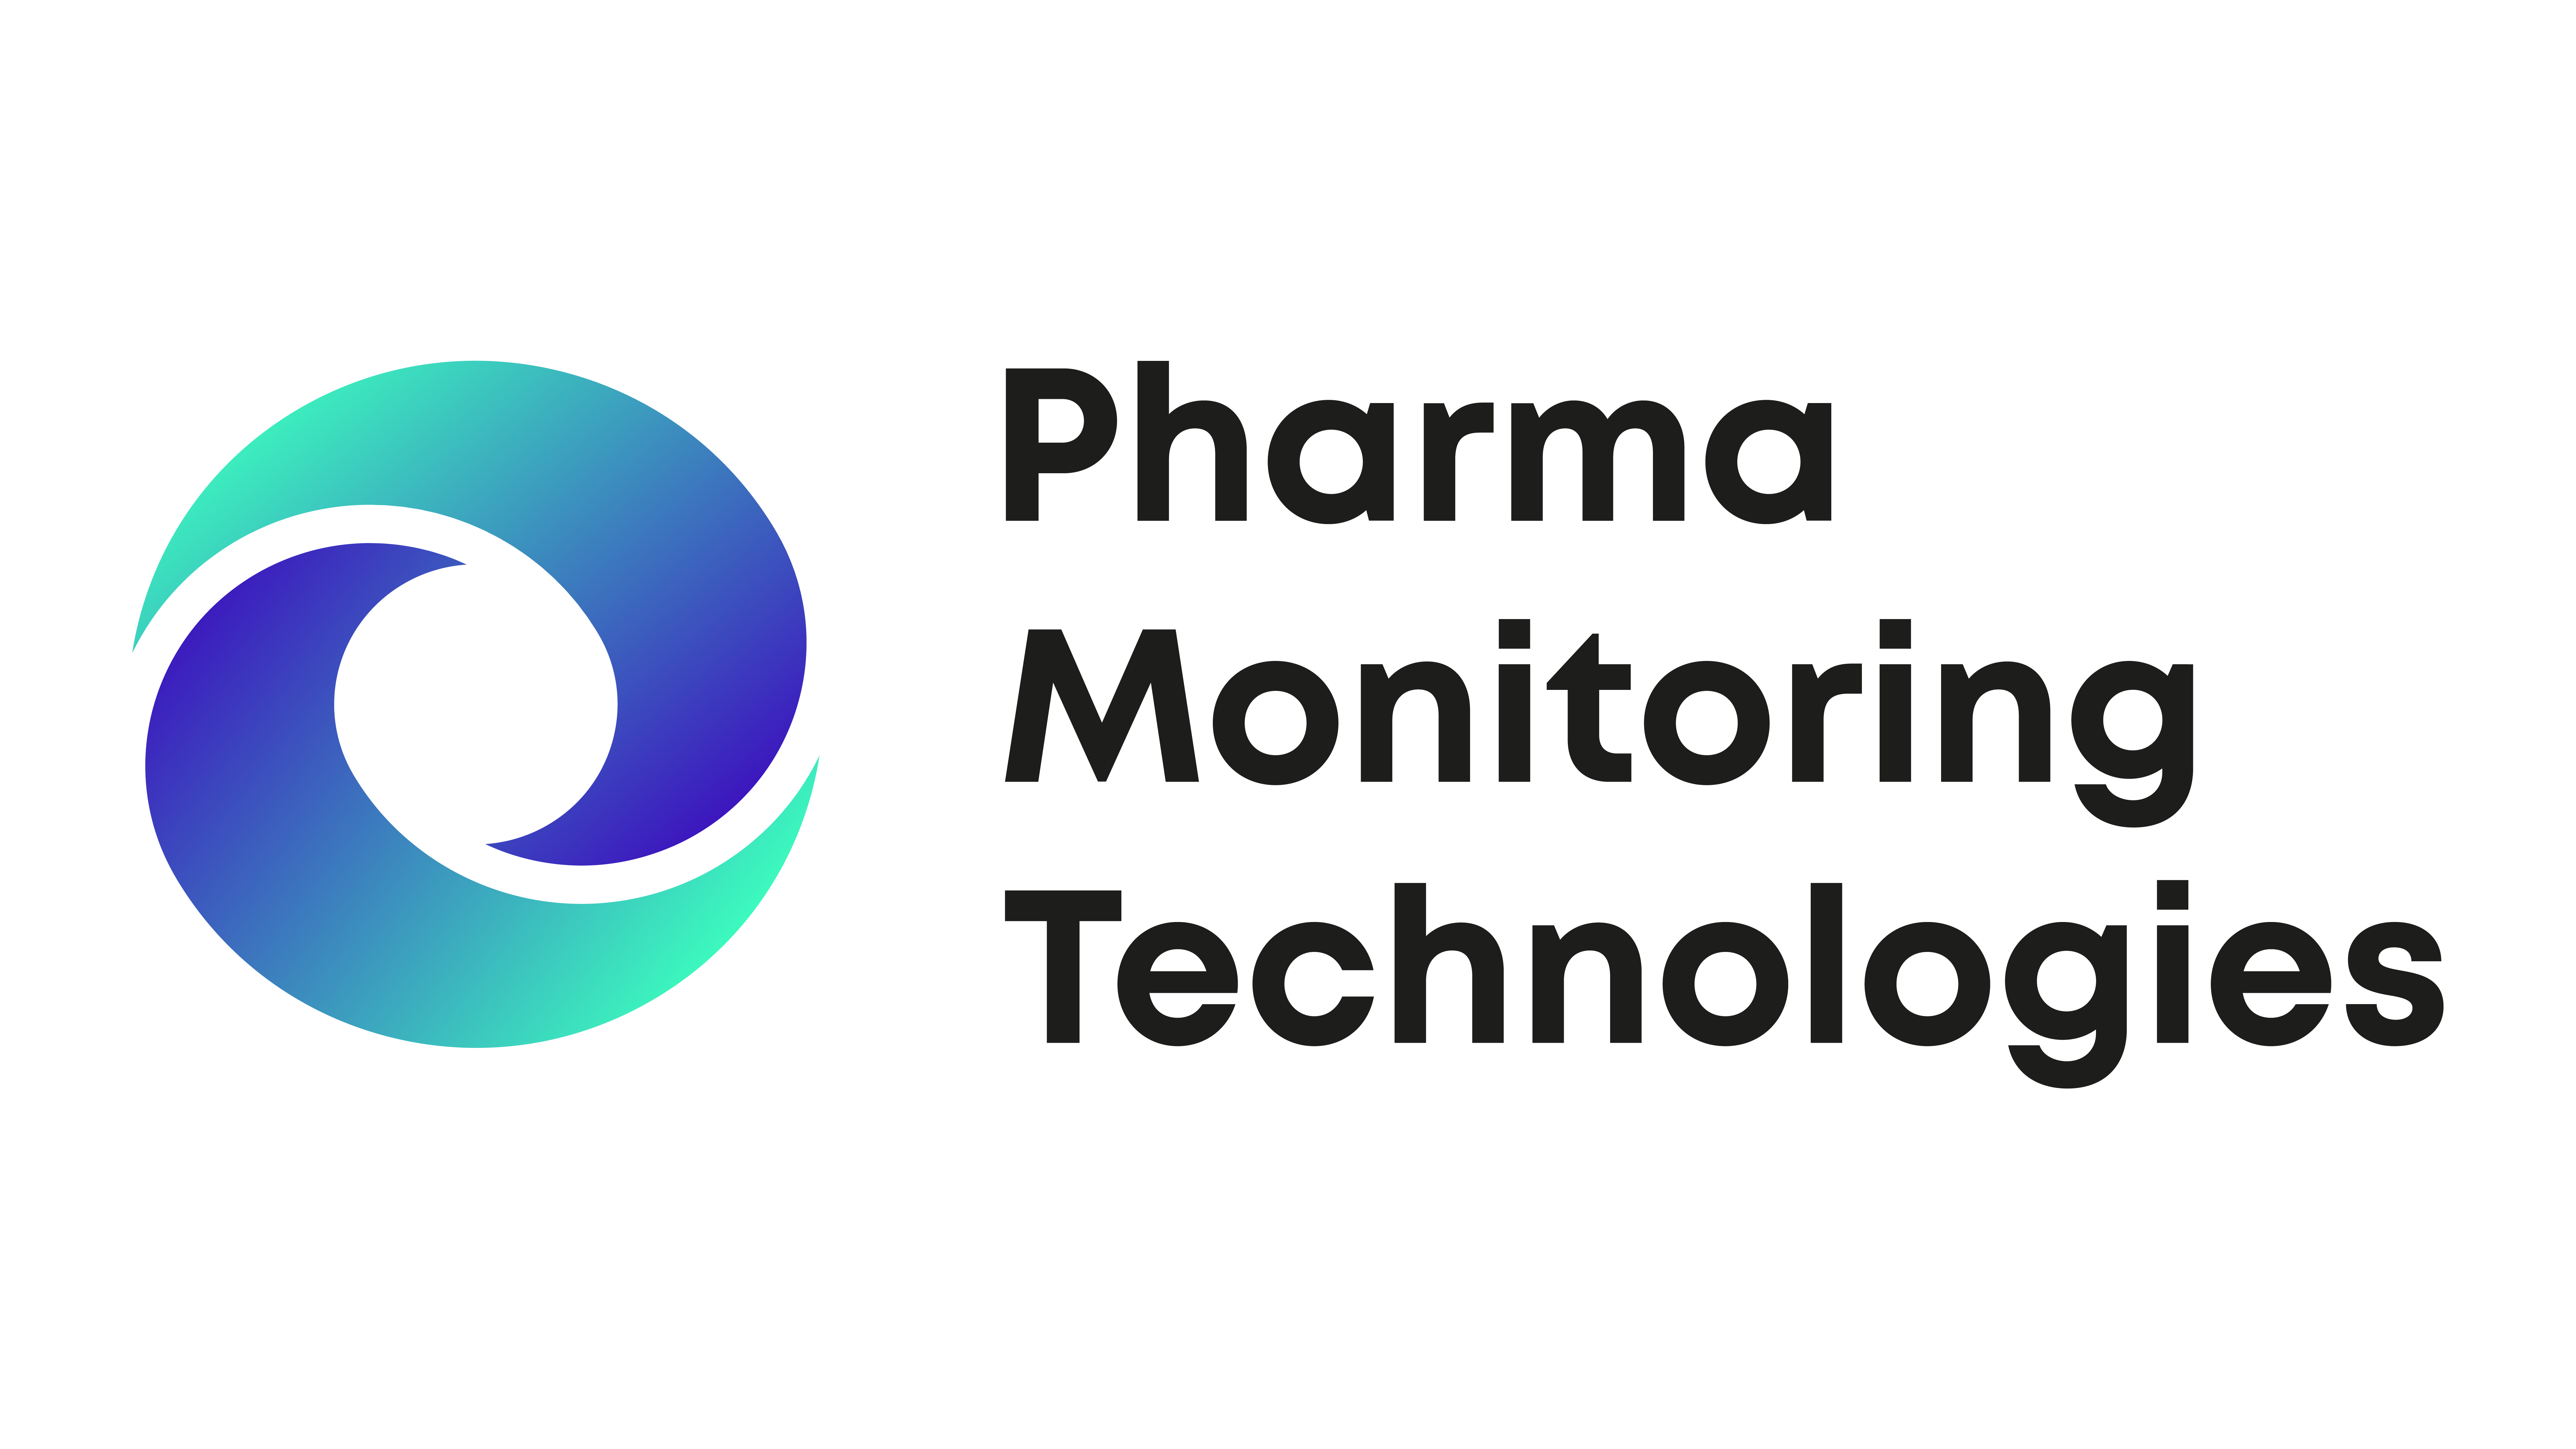 Pharma Monitoring Technologies